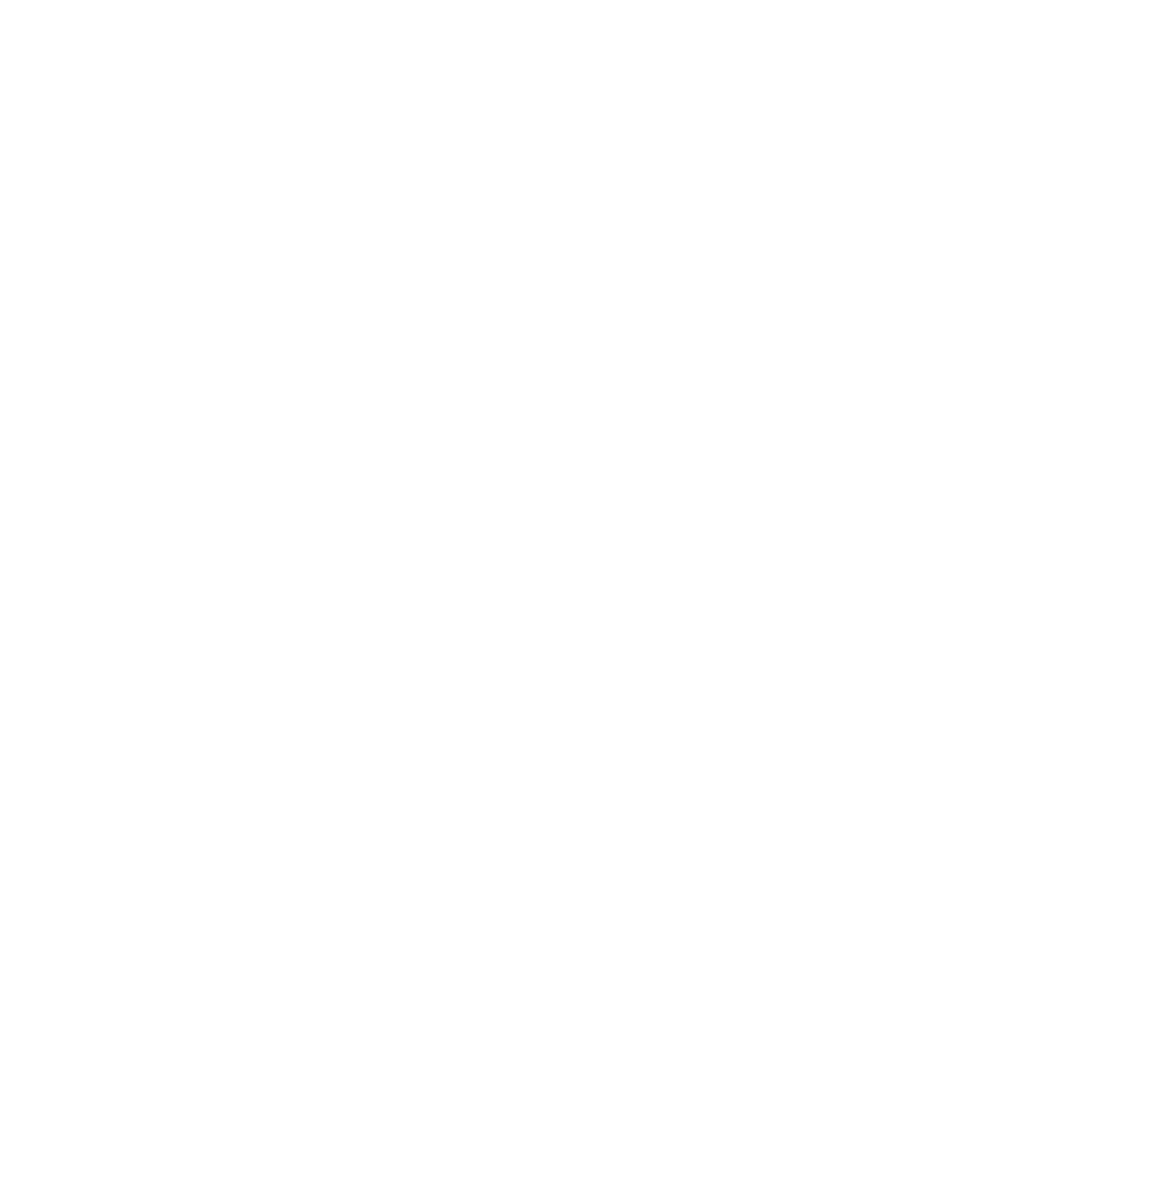 OZCS West-Brabant